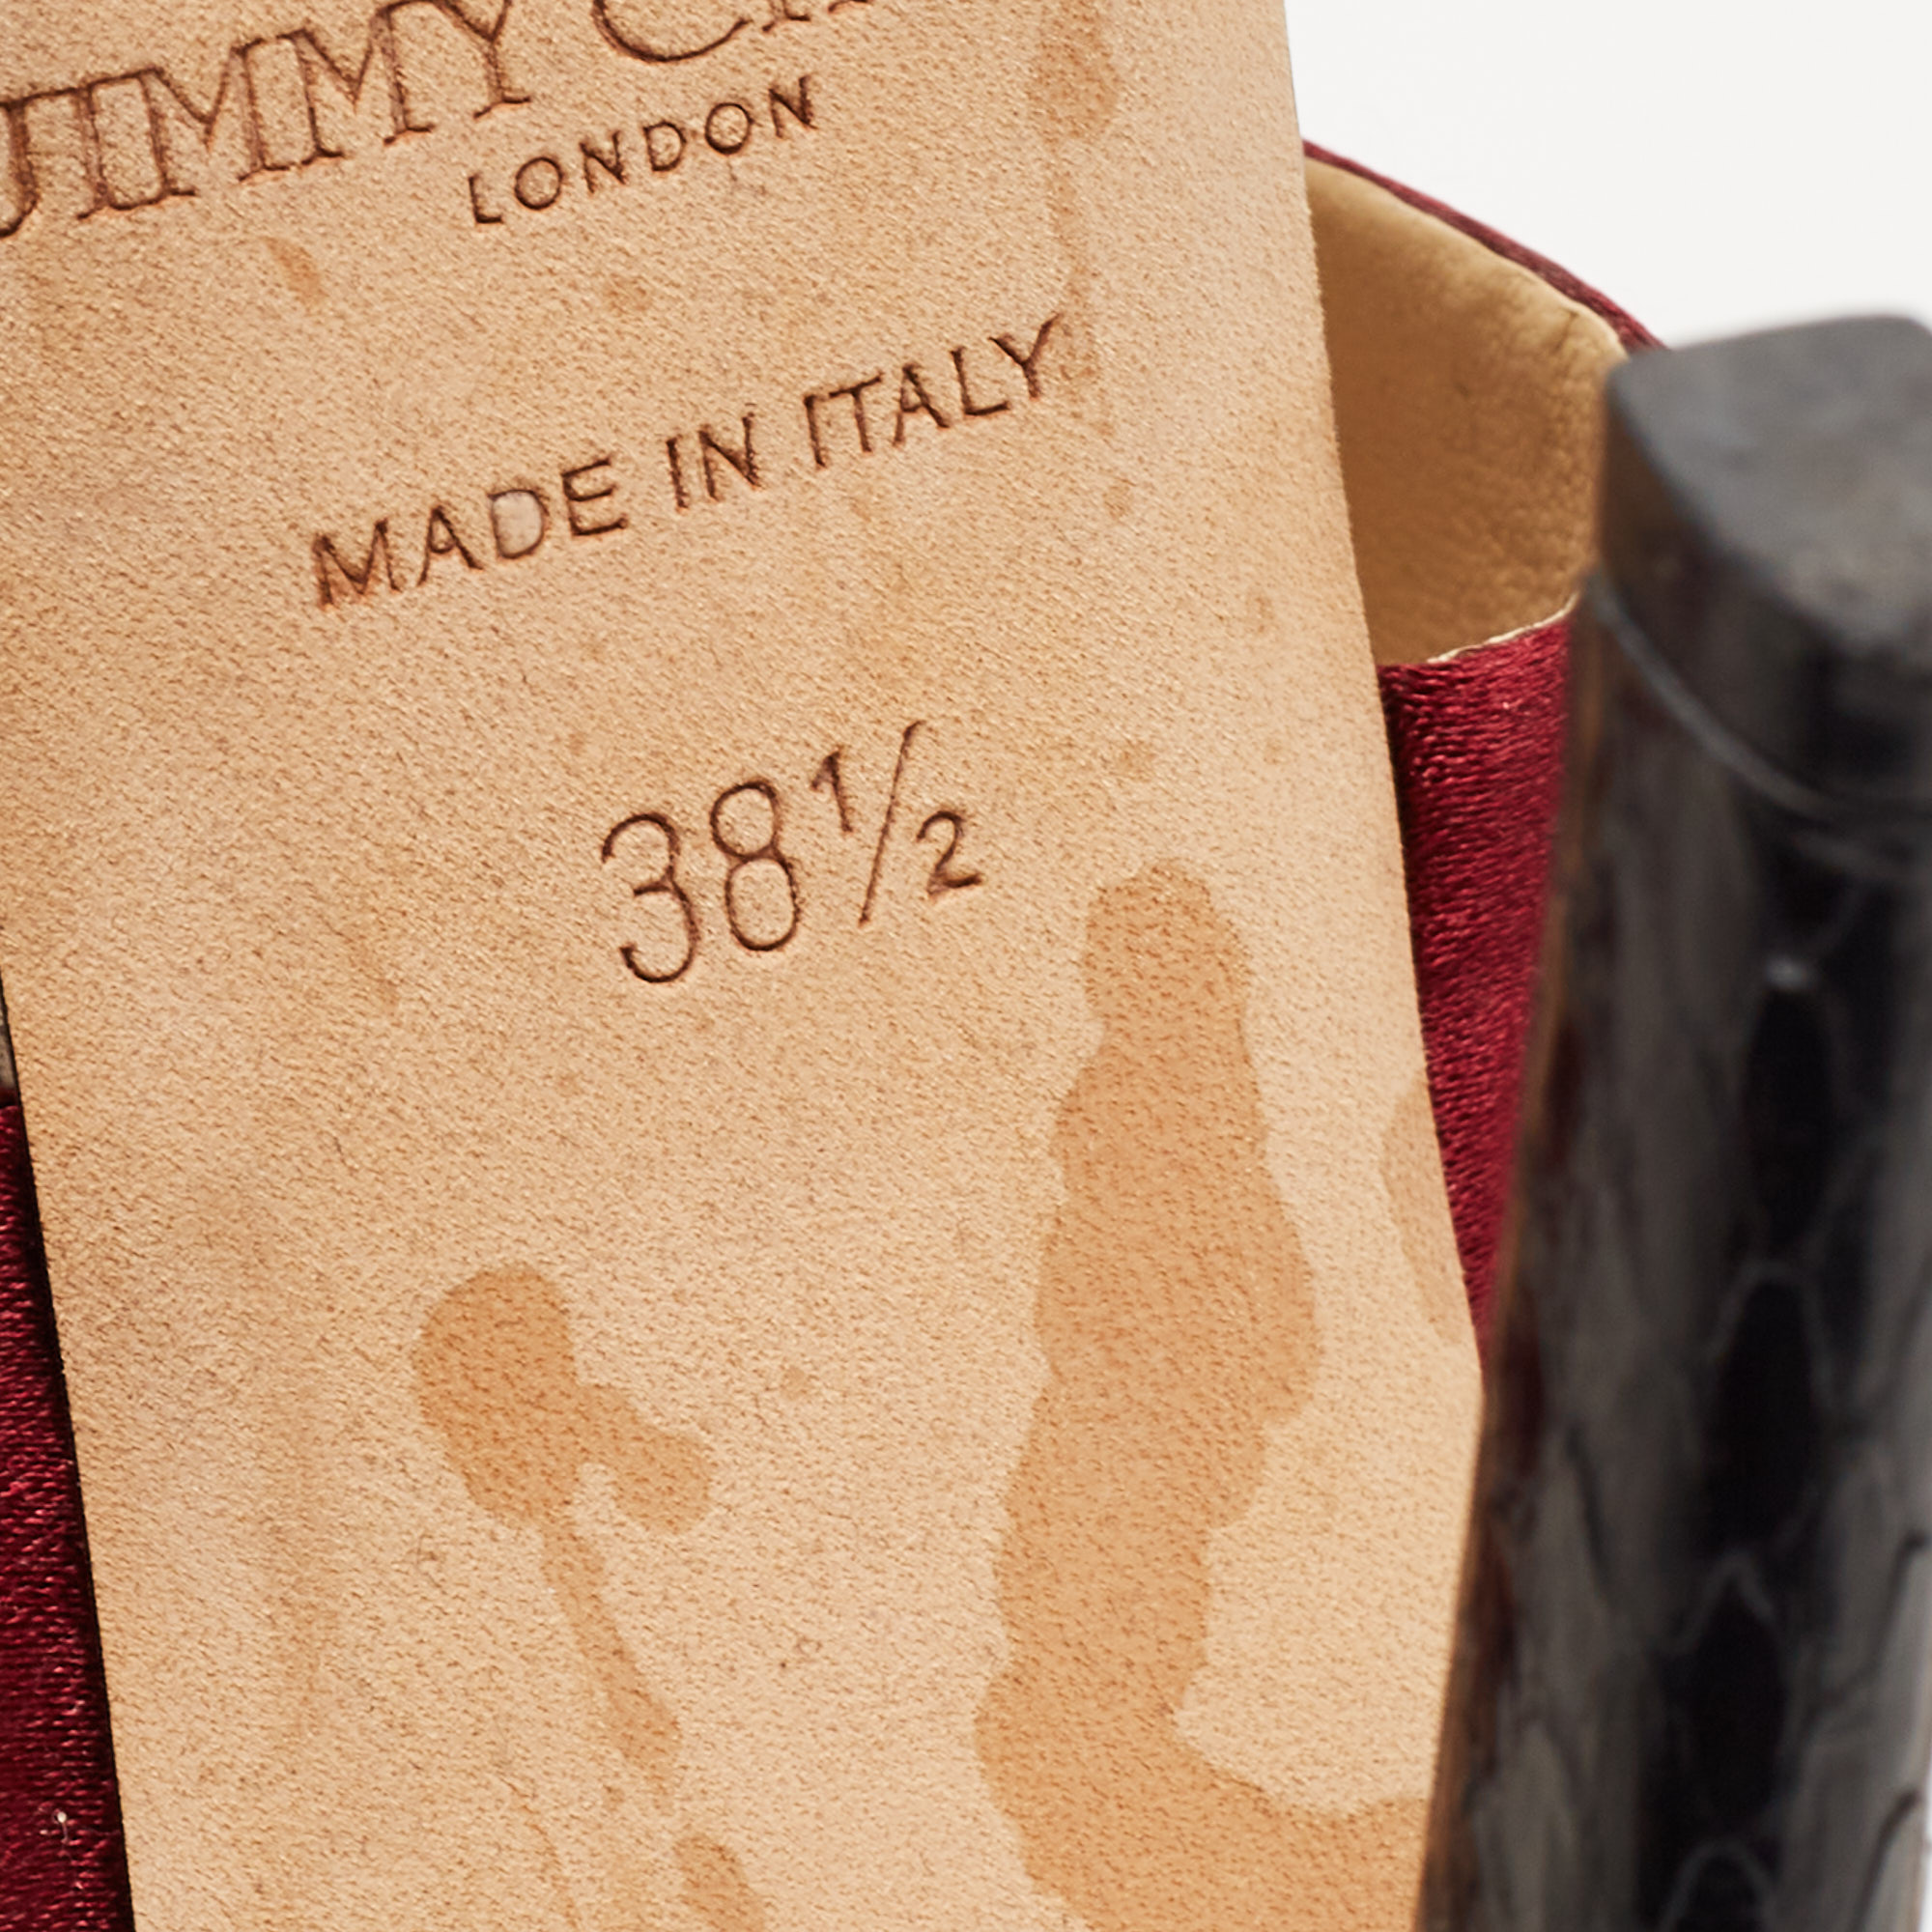 Jimmy Choo Tricolor Python, Satin And Leather Fedora Fringe Sandals Size 38.5